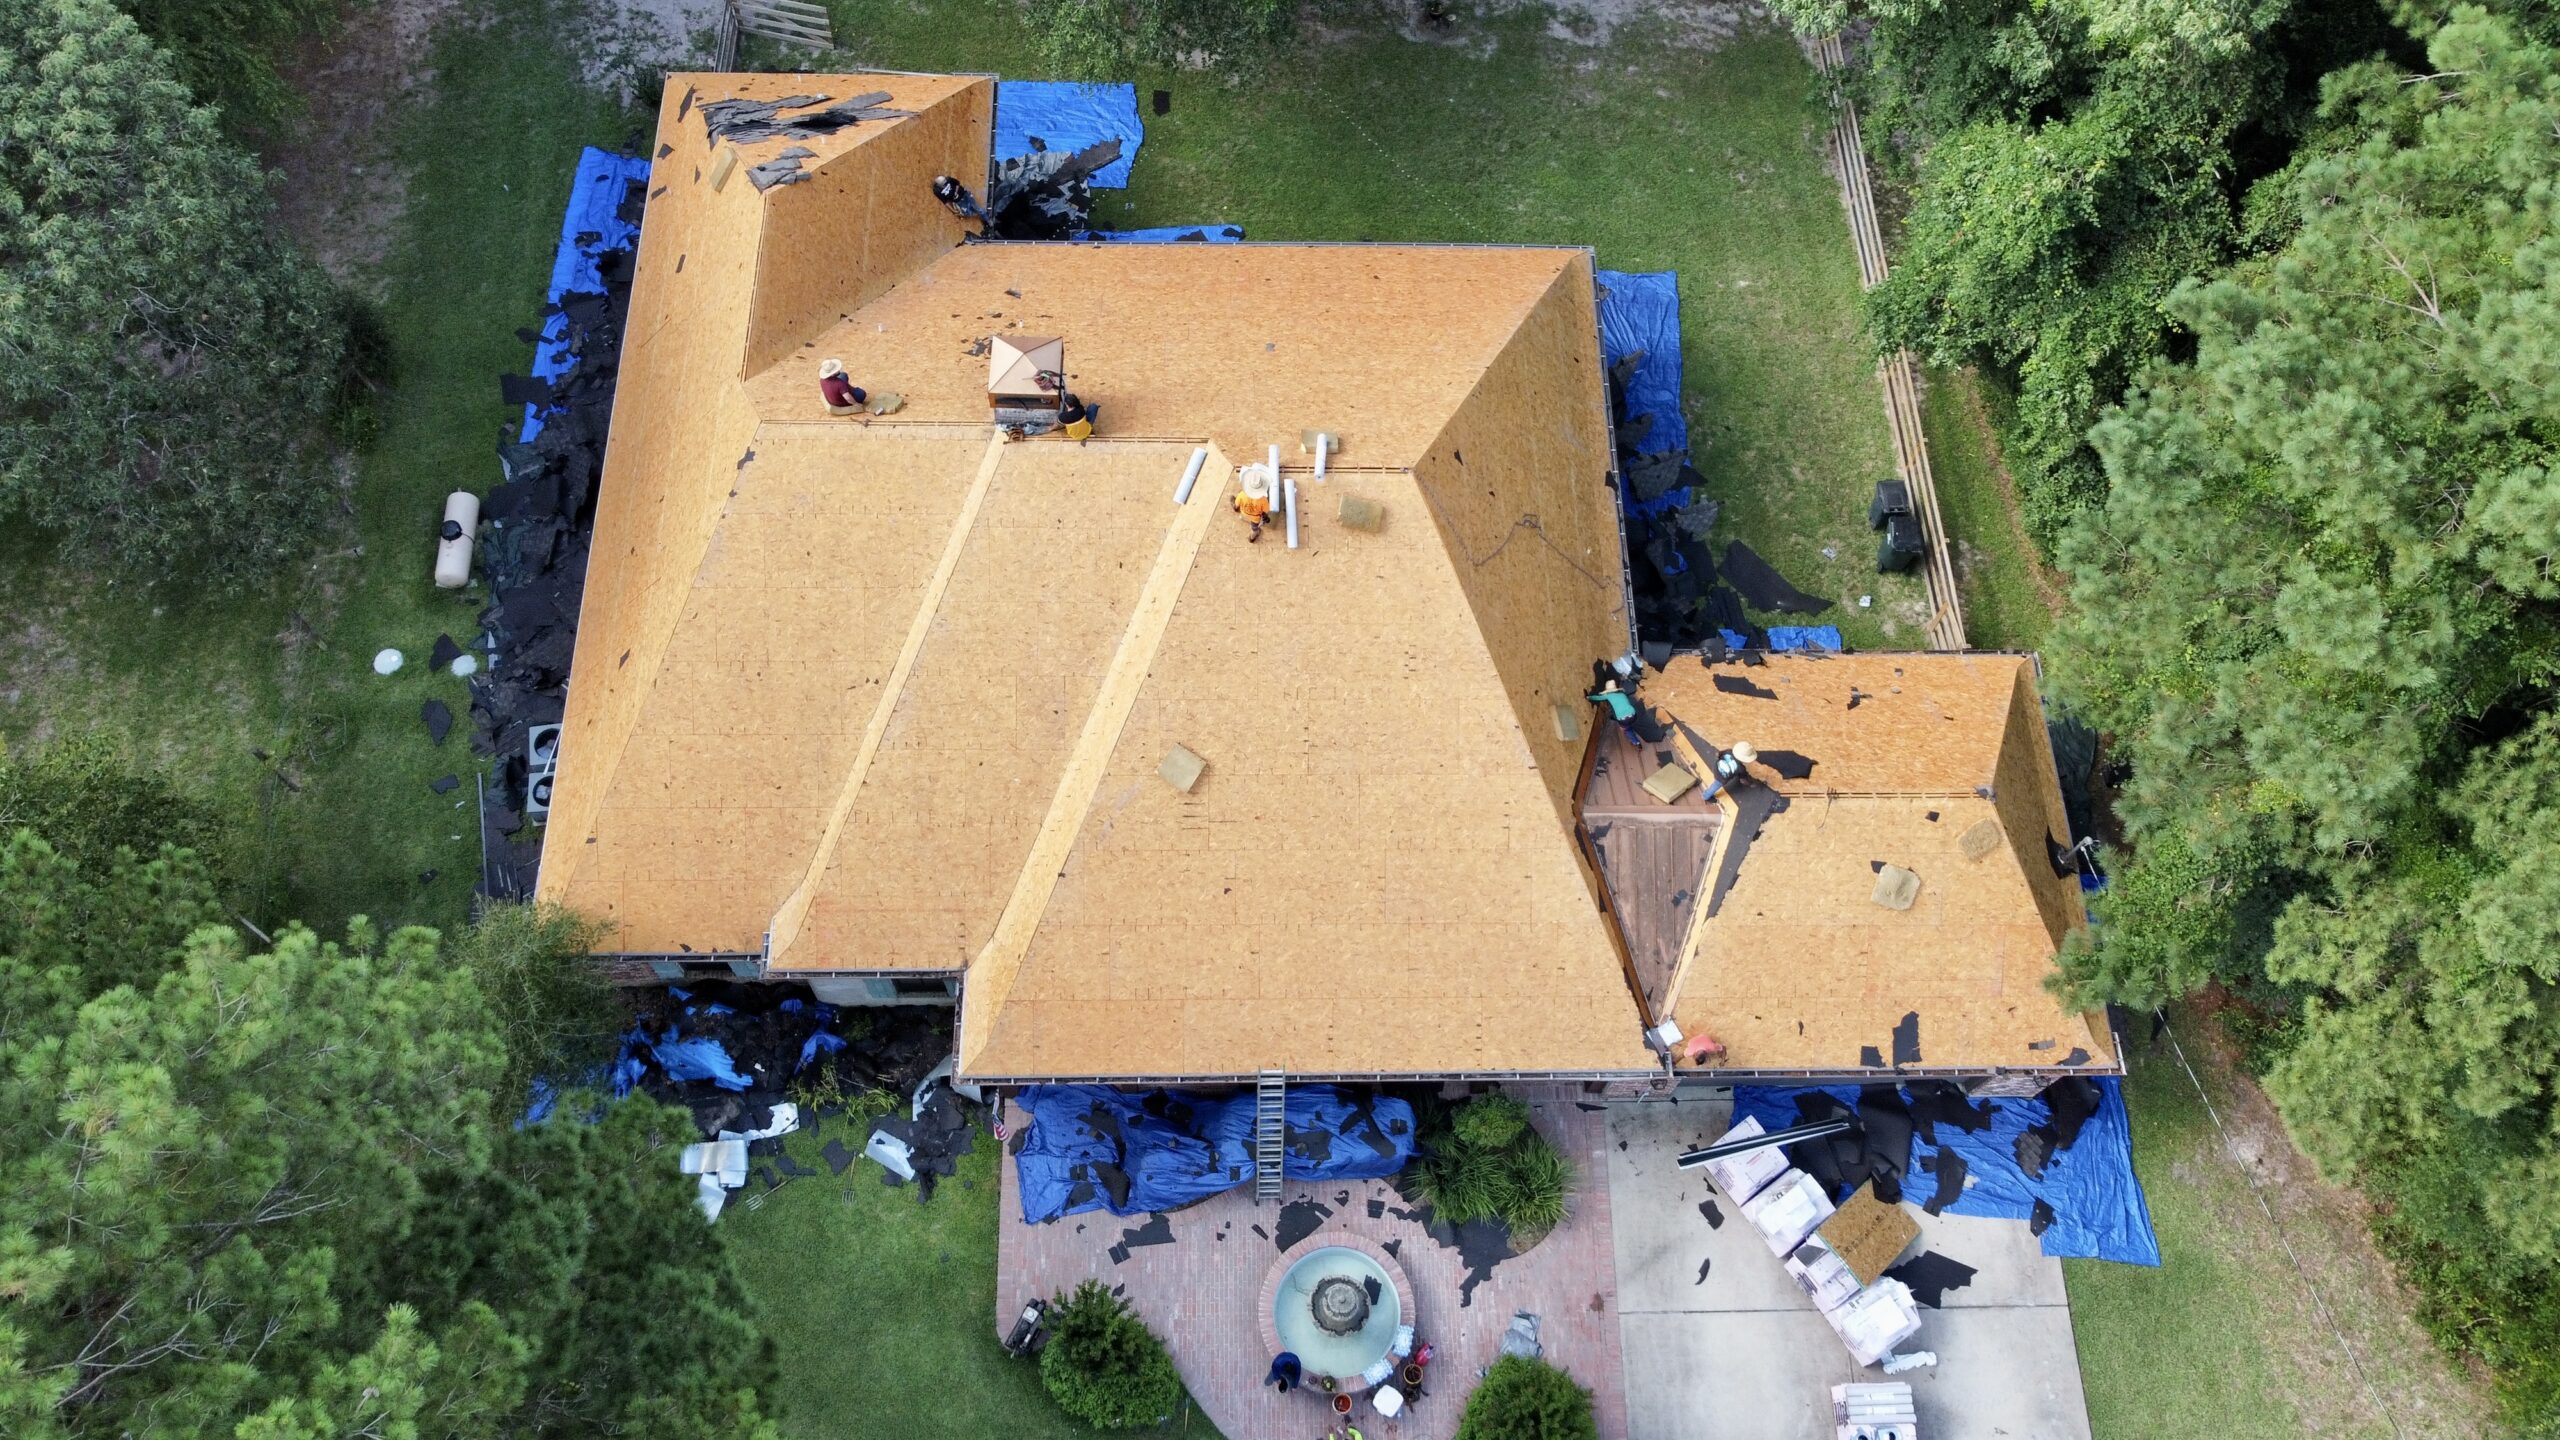 Angelman roofing and restoration work